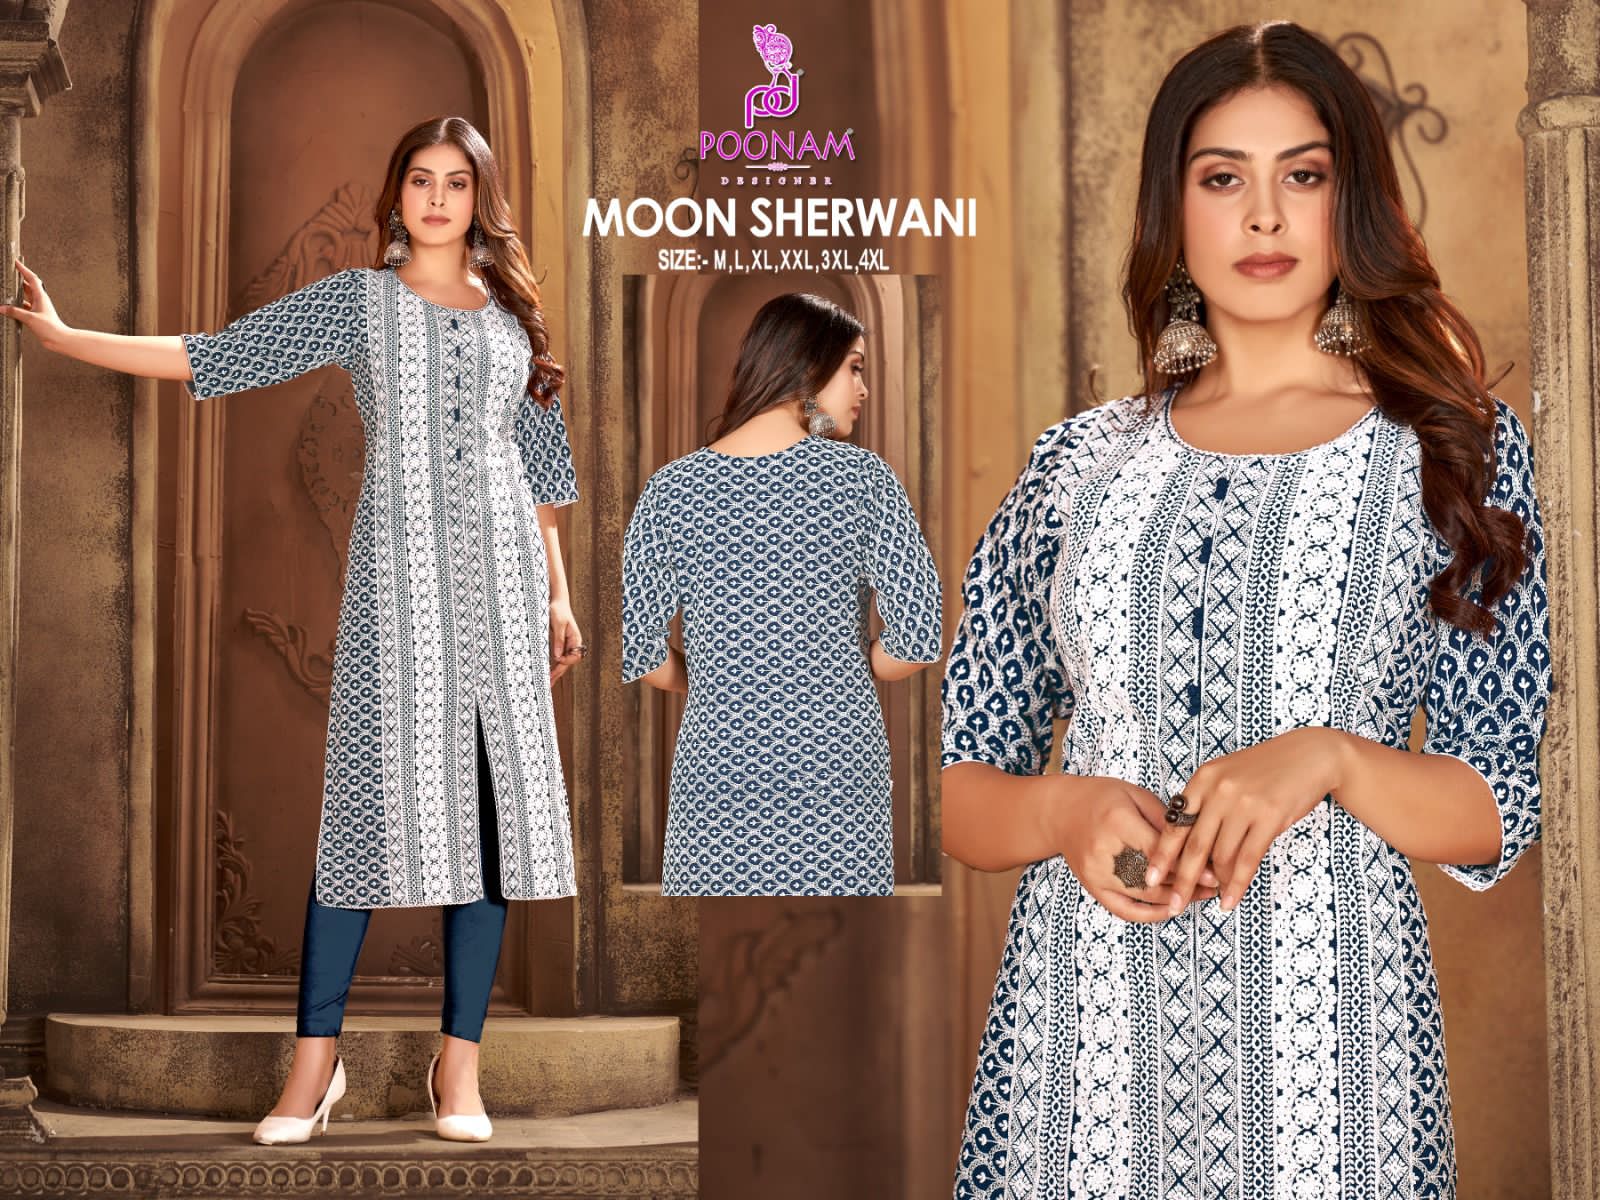 Poonam Moon Sherwani collection 9